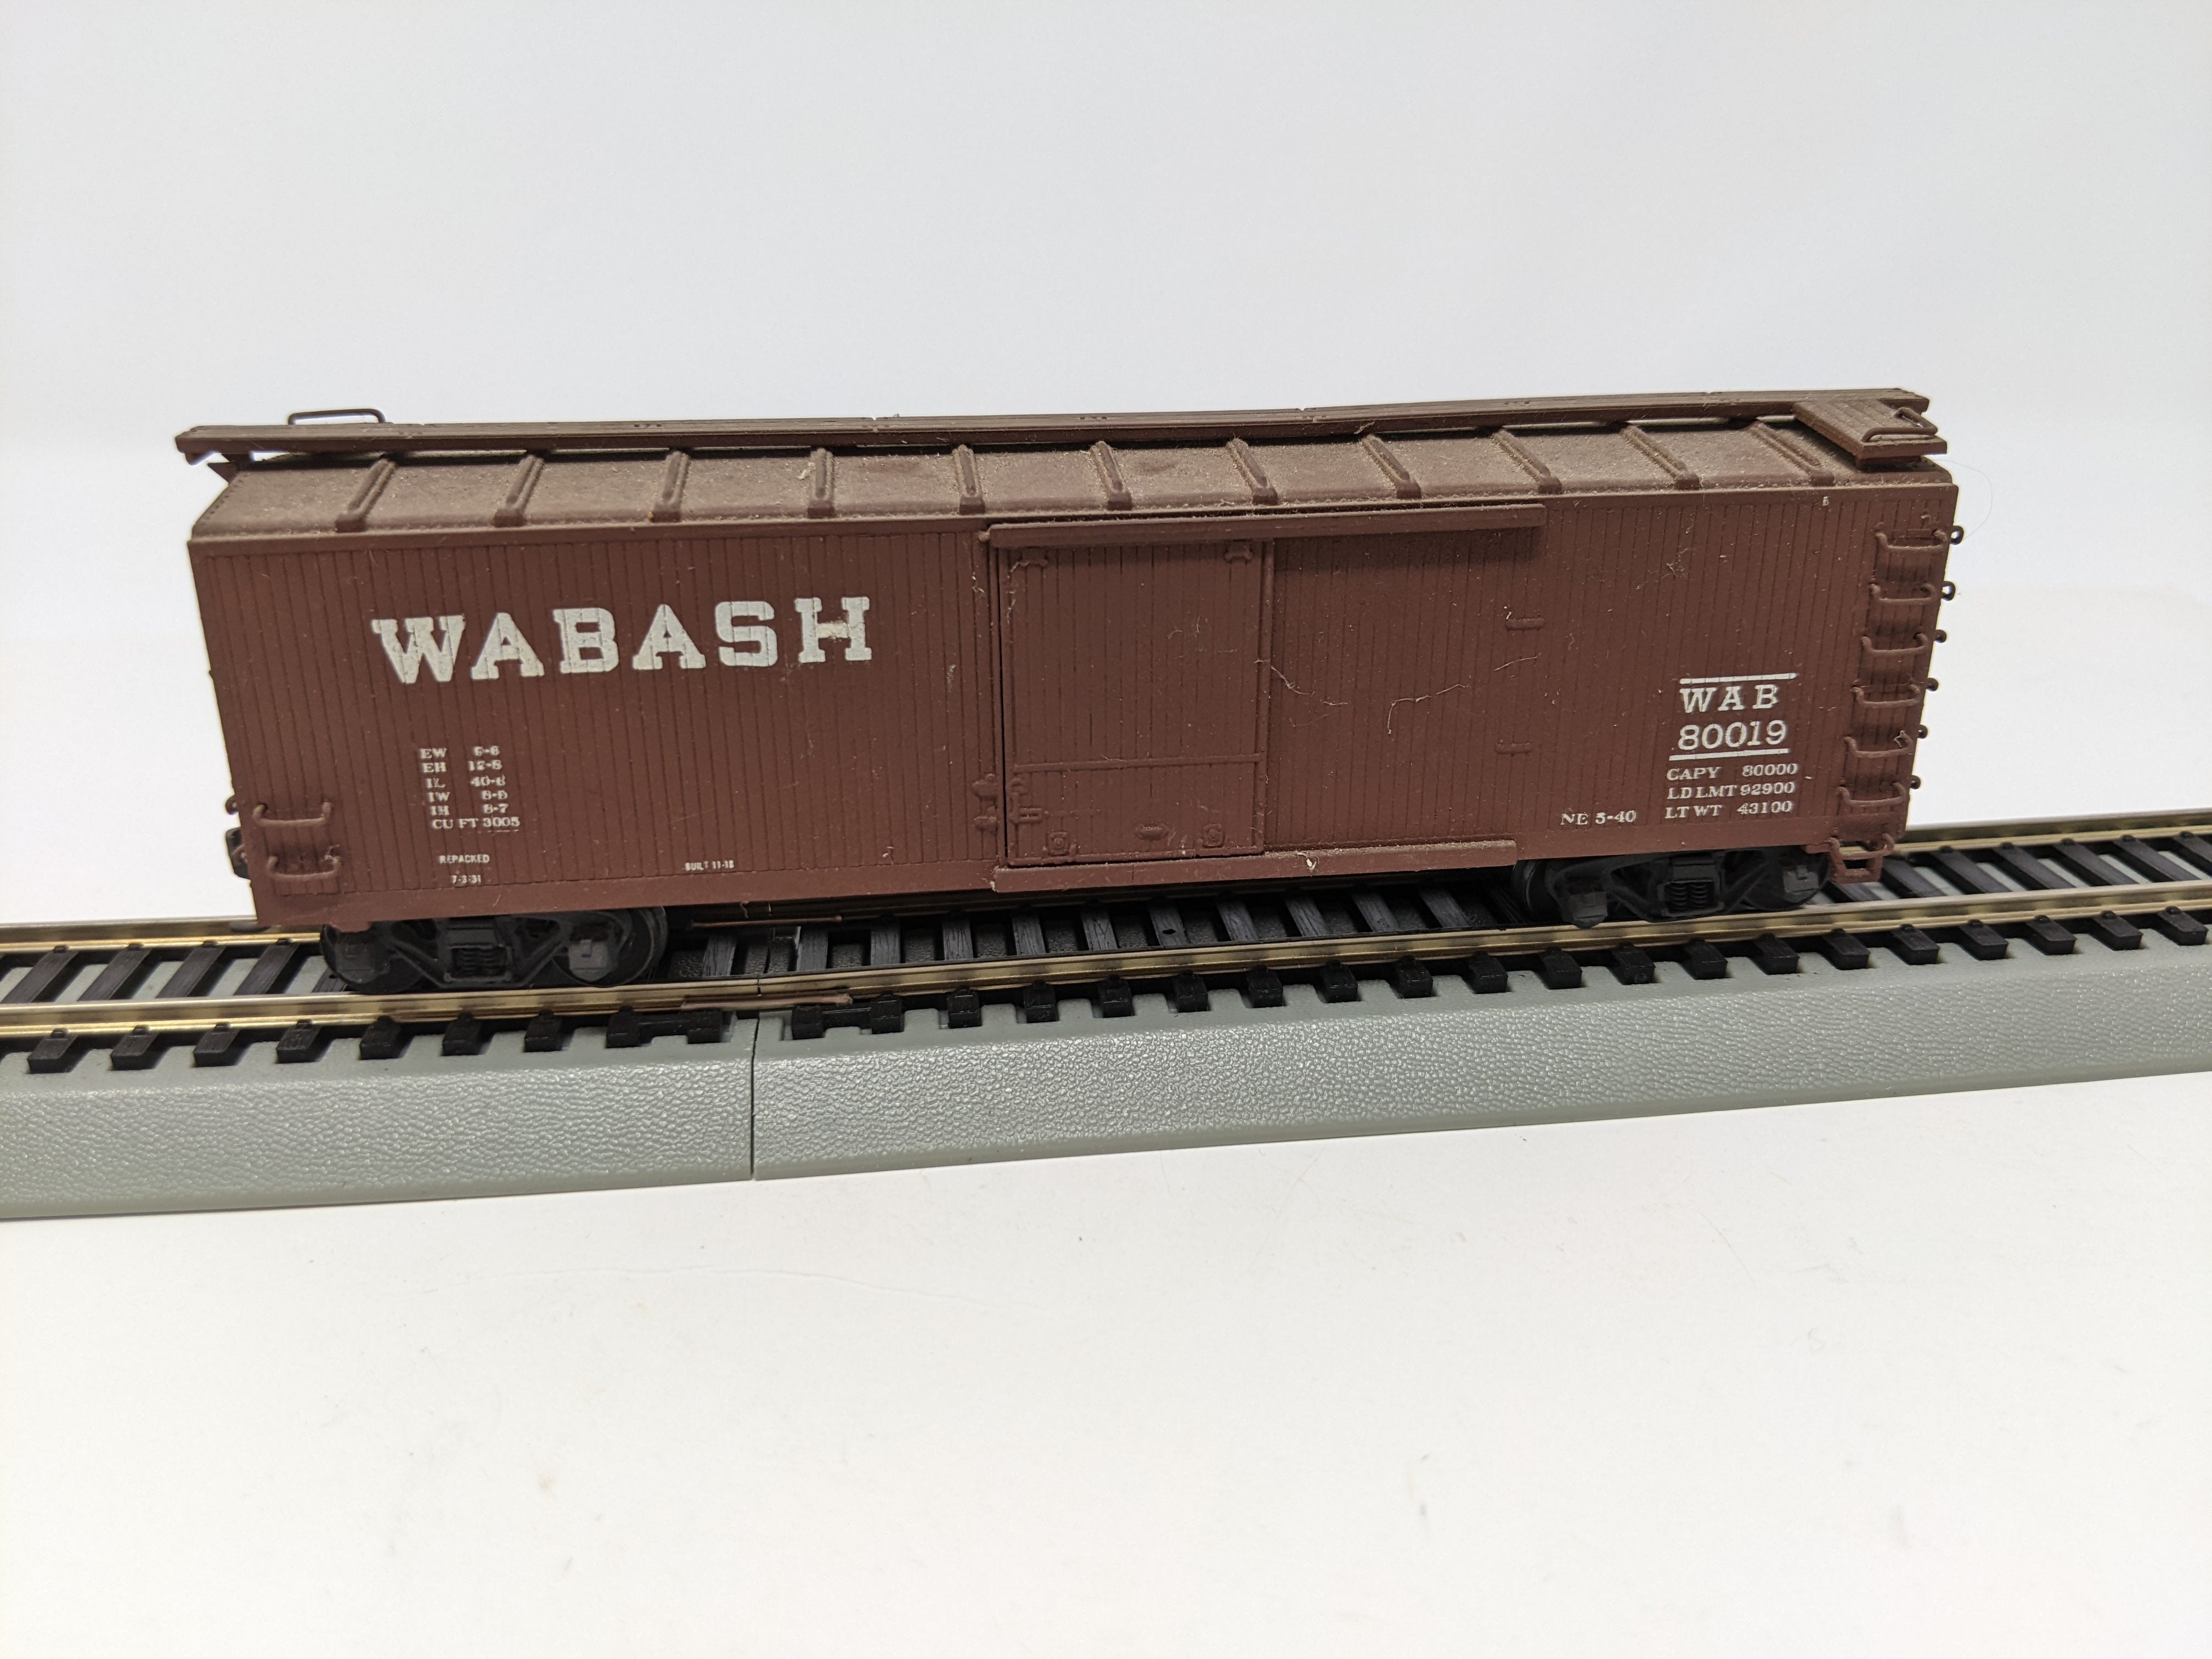 USED HO Scale, 40' Wooden Box Car, Wabash WAB #80019, Read Description